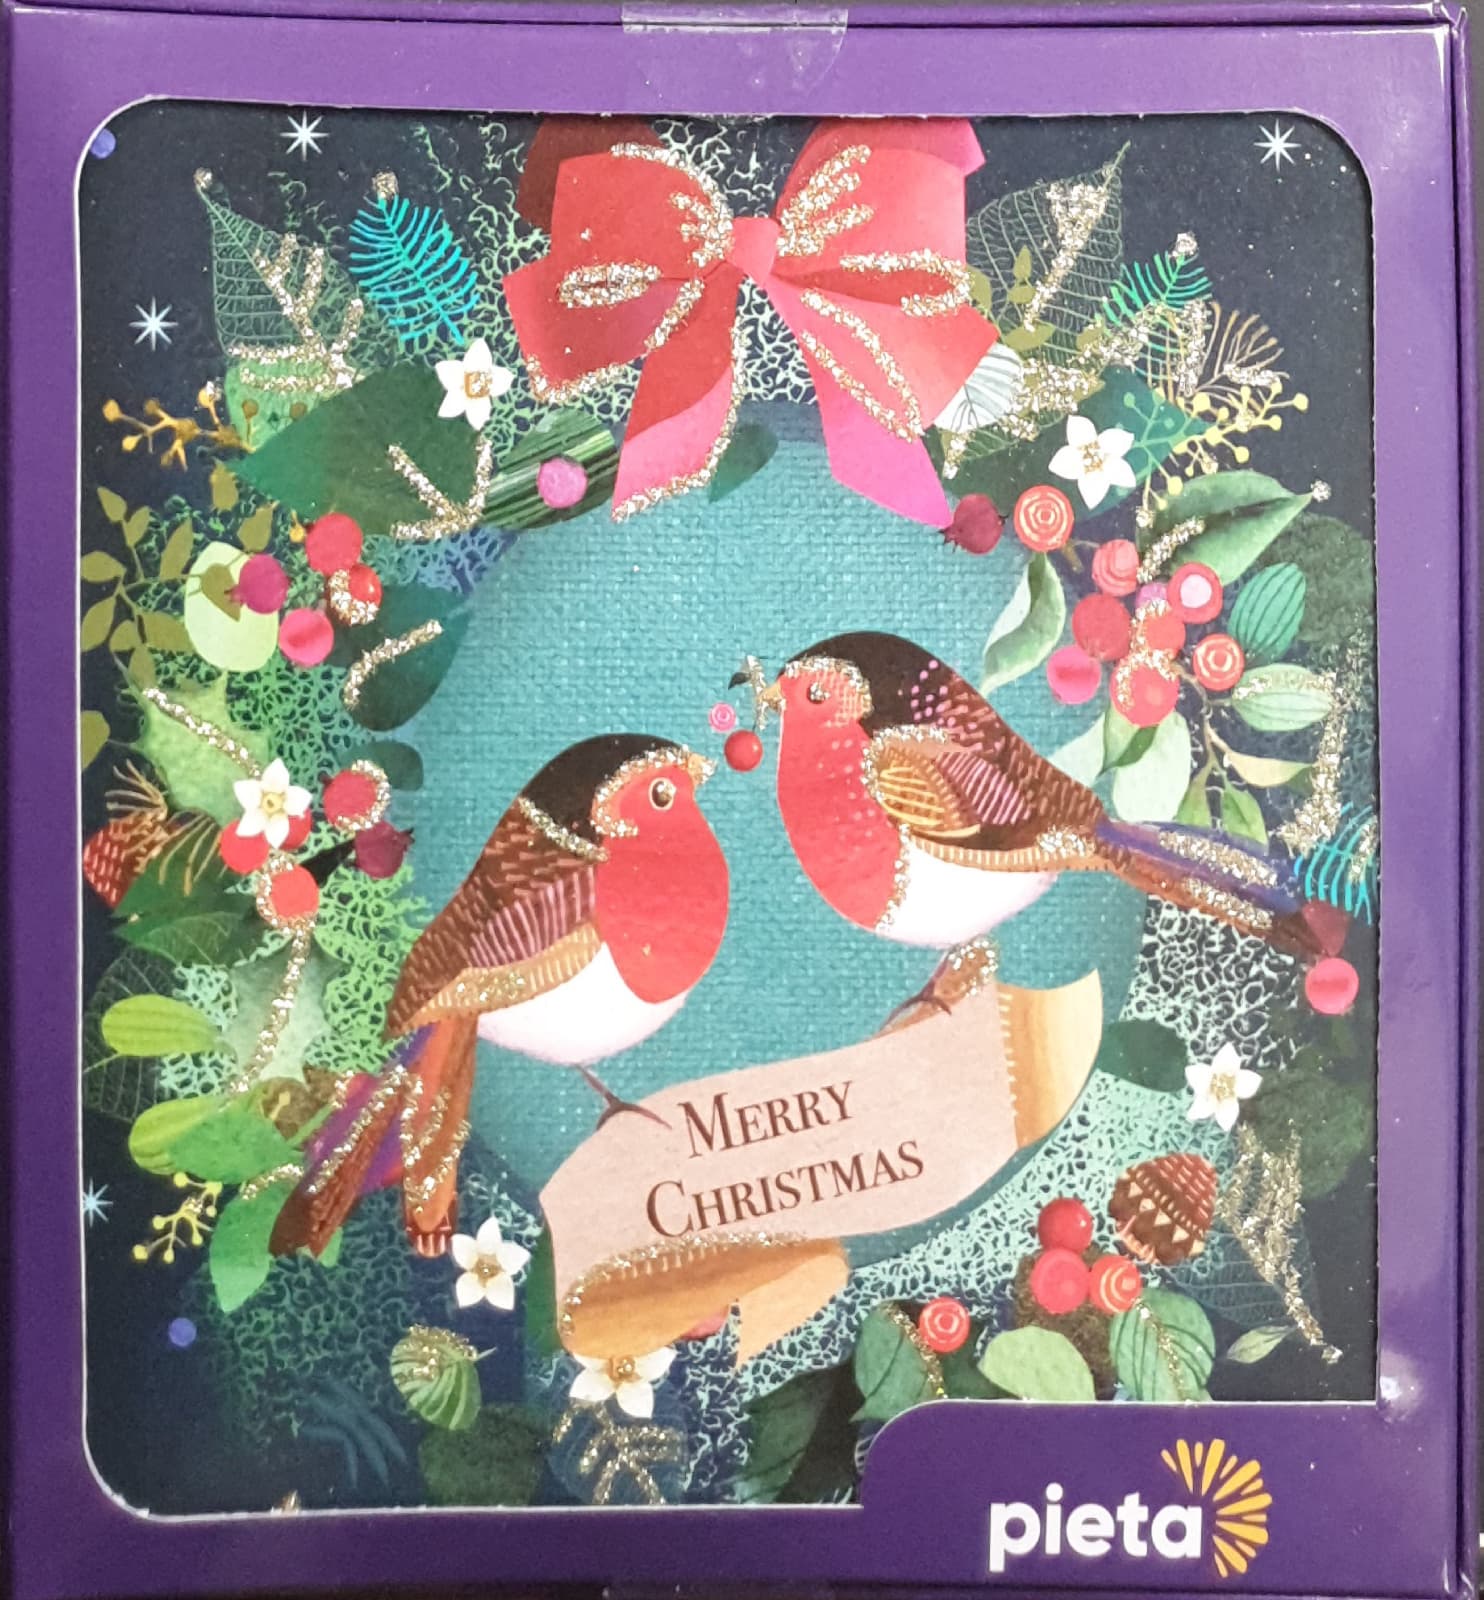 Charity Christmas Card (In Irish & English) - Box of 16 / Pieta - Two Robins Sharing Berry & Wreath